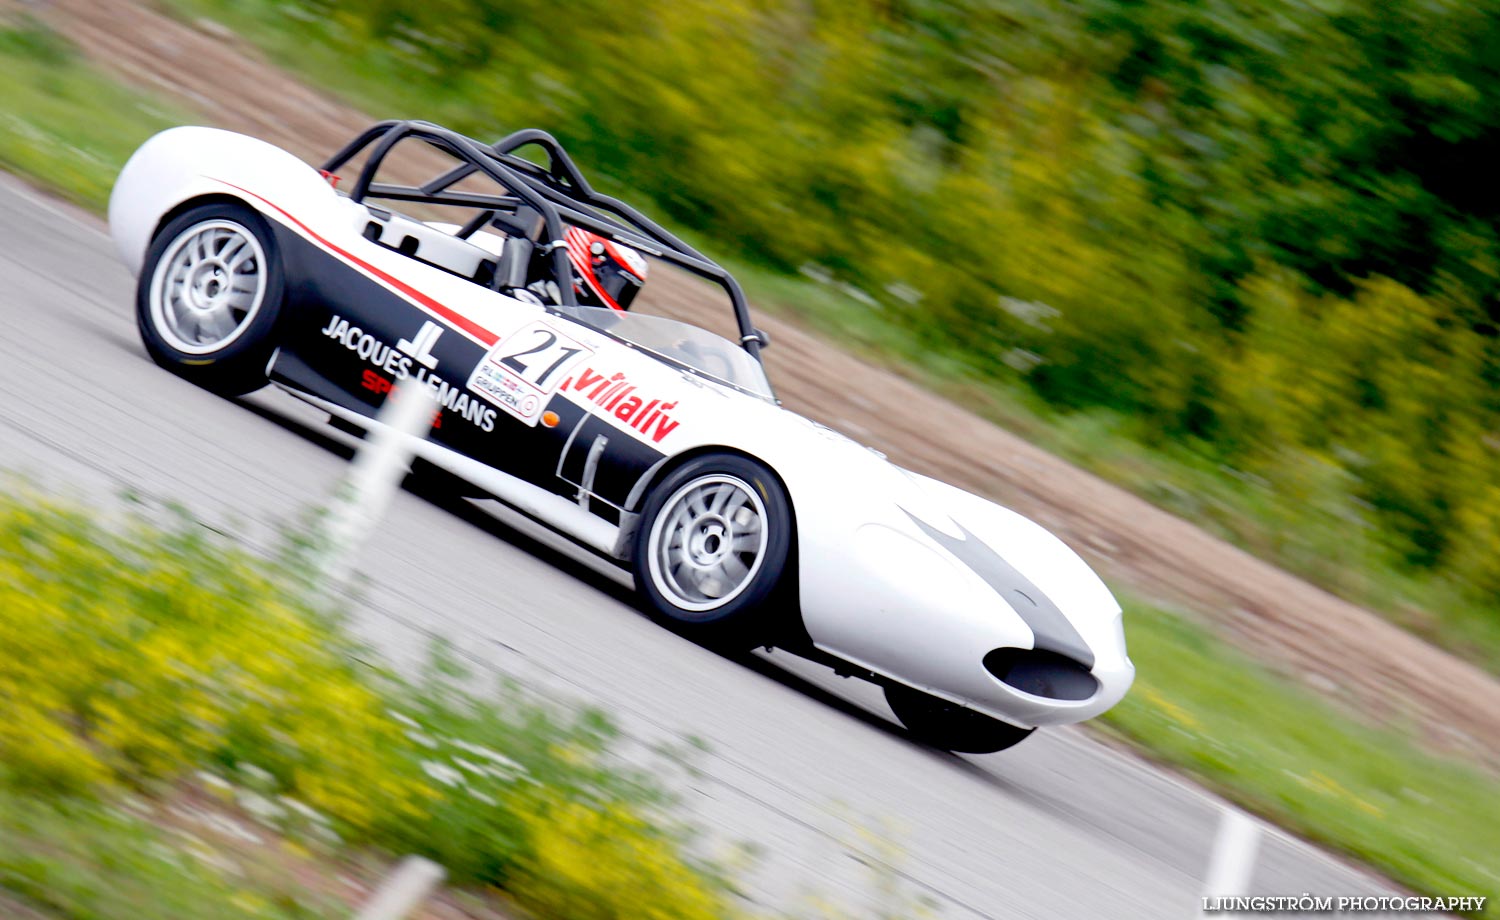 SSK Raceweek,mix,Kinnekulle Ring,Götene,Sverige,Motorsport,,2009,107701